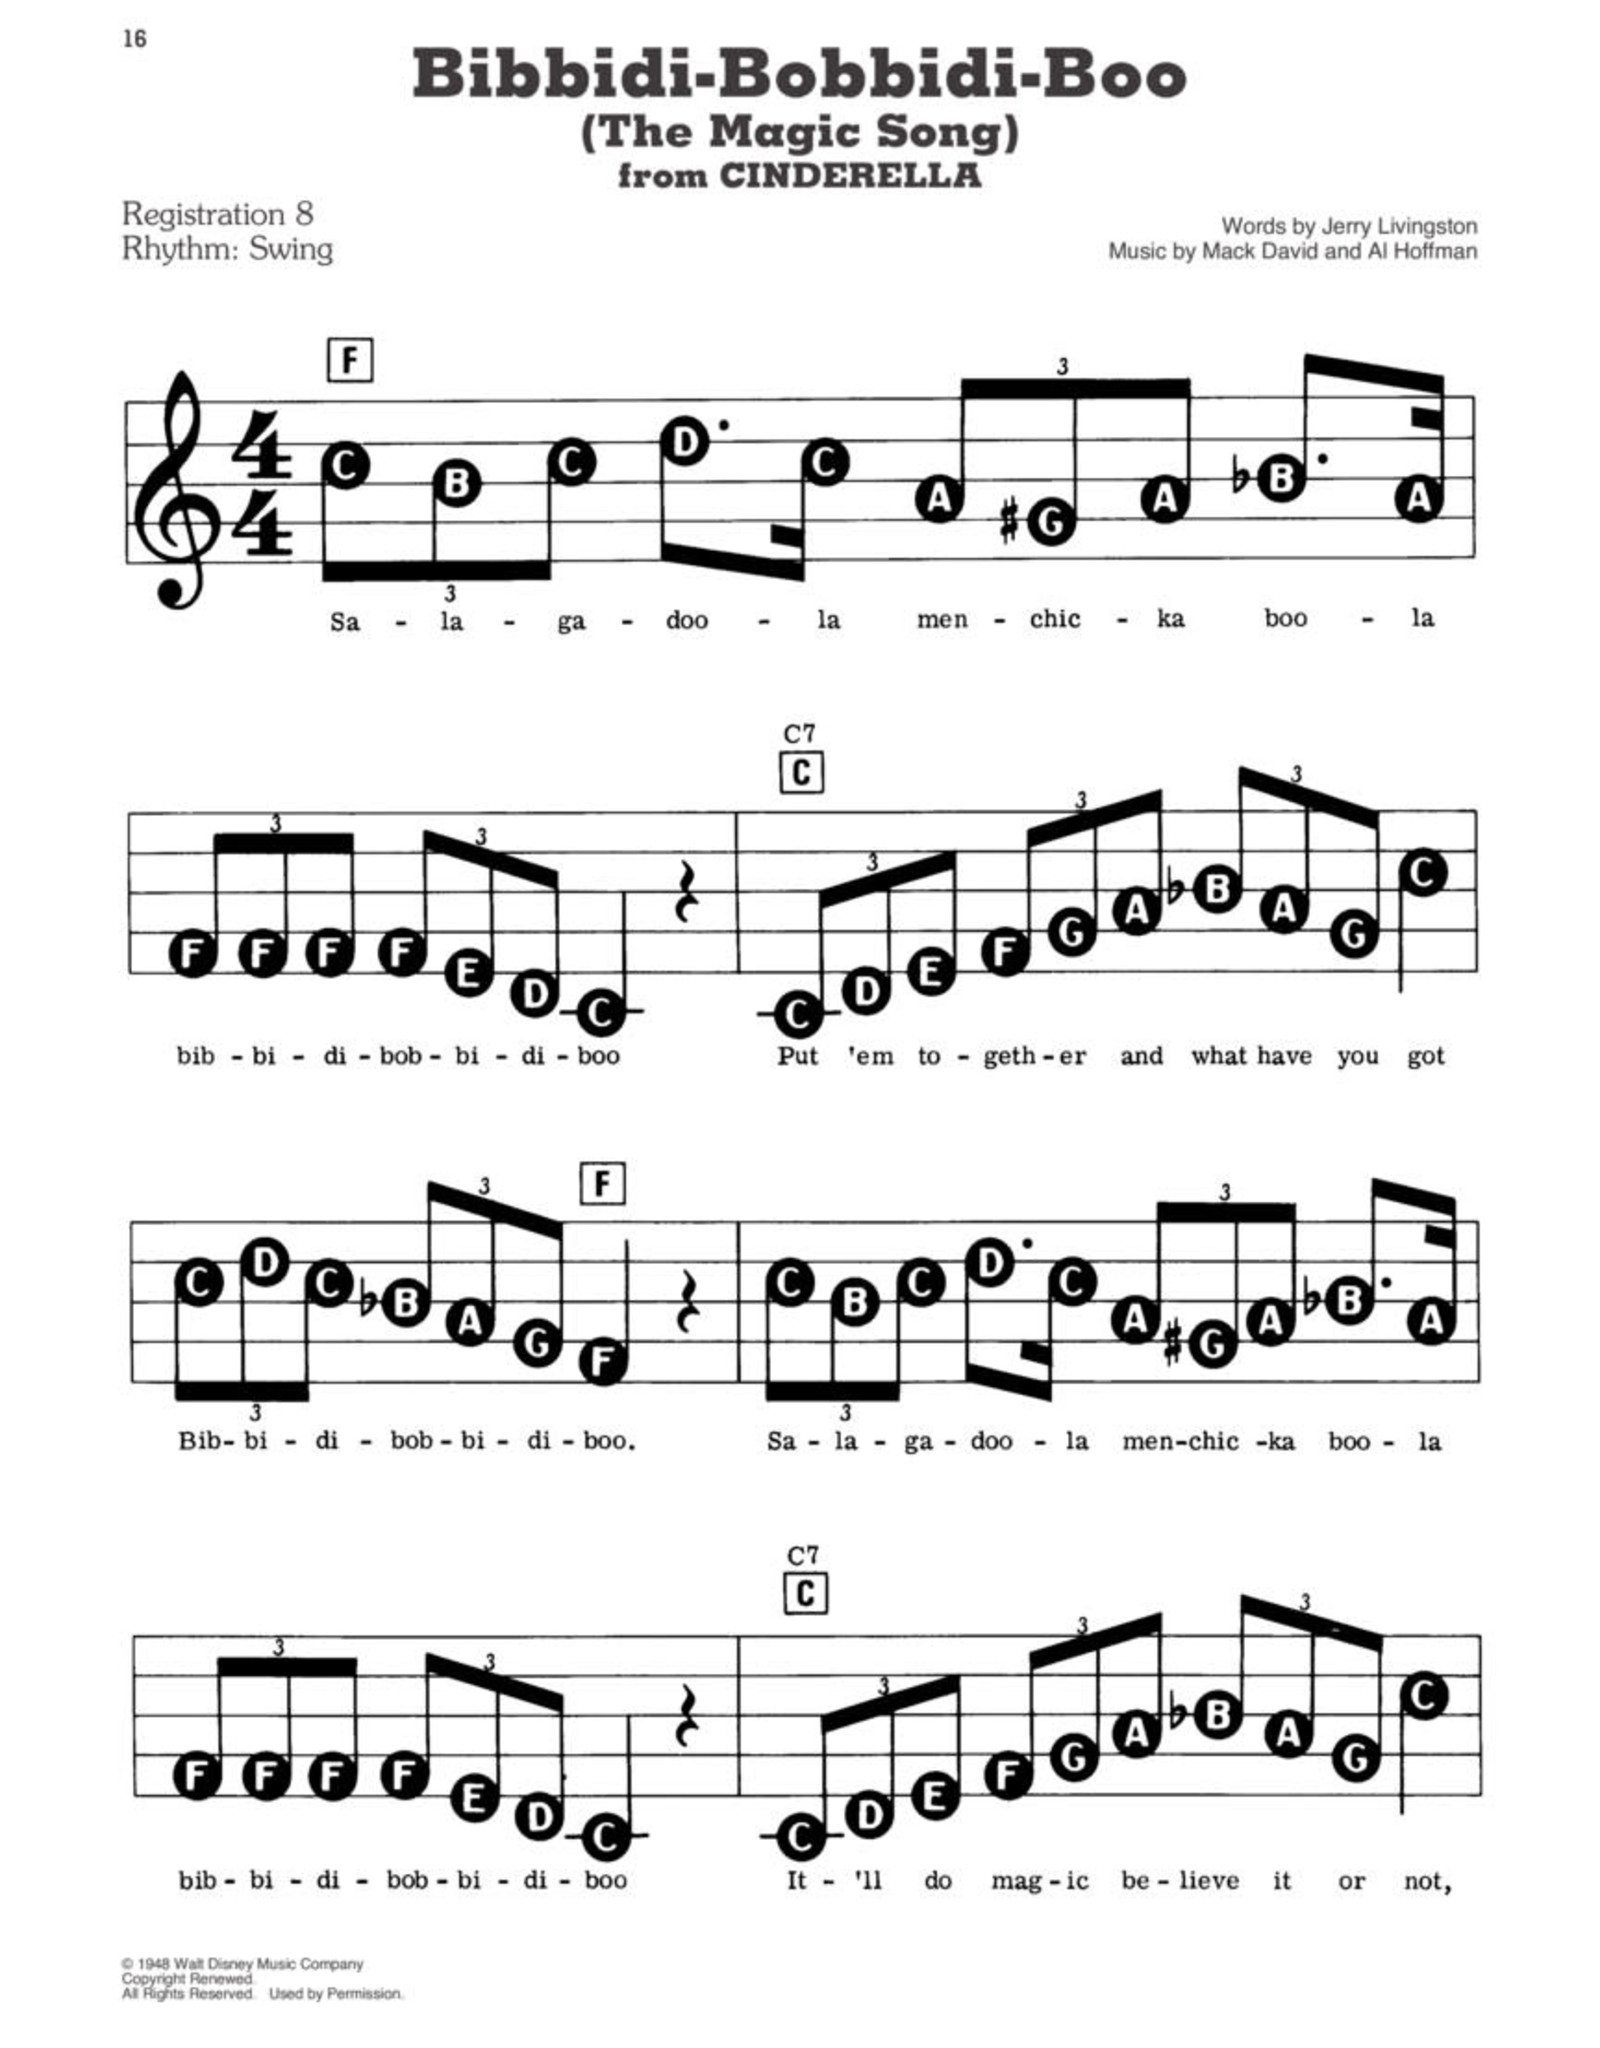 Hal Leonard Disney Fun Songs - E-Z Play Today (5 Finger)